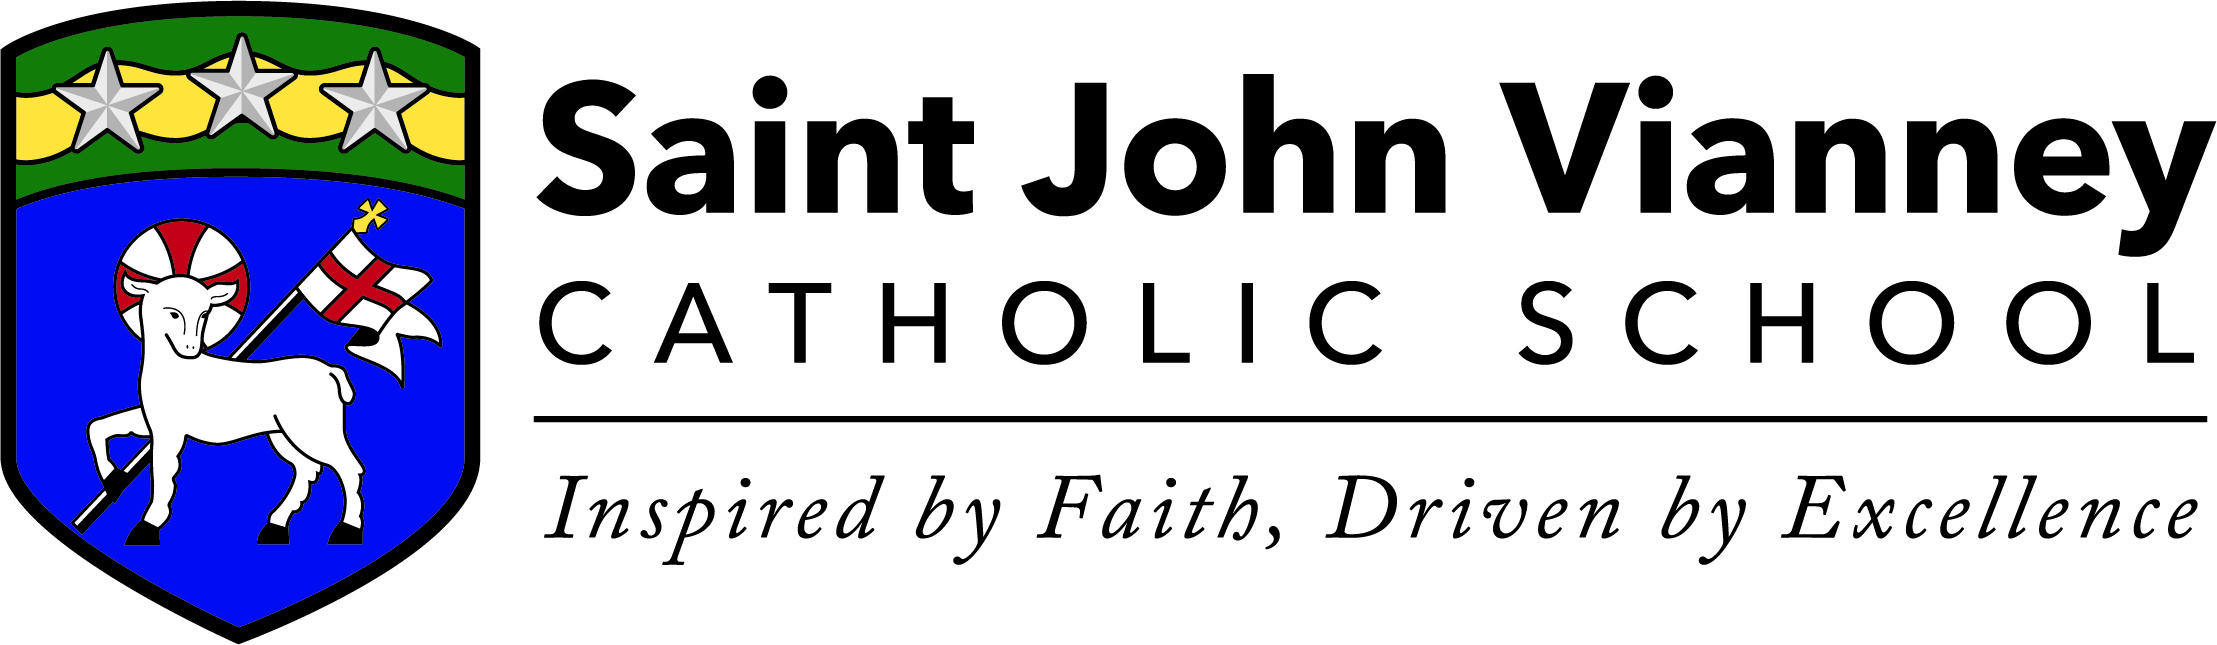 Saint John Vianney Catholic School Logo